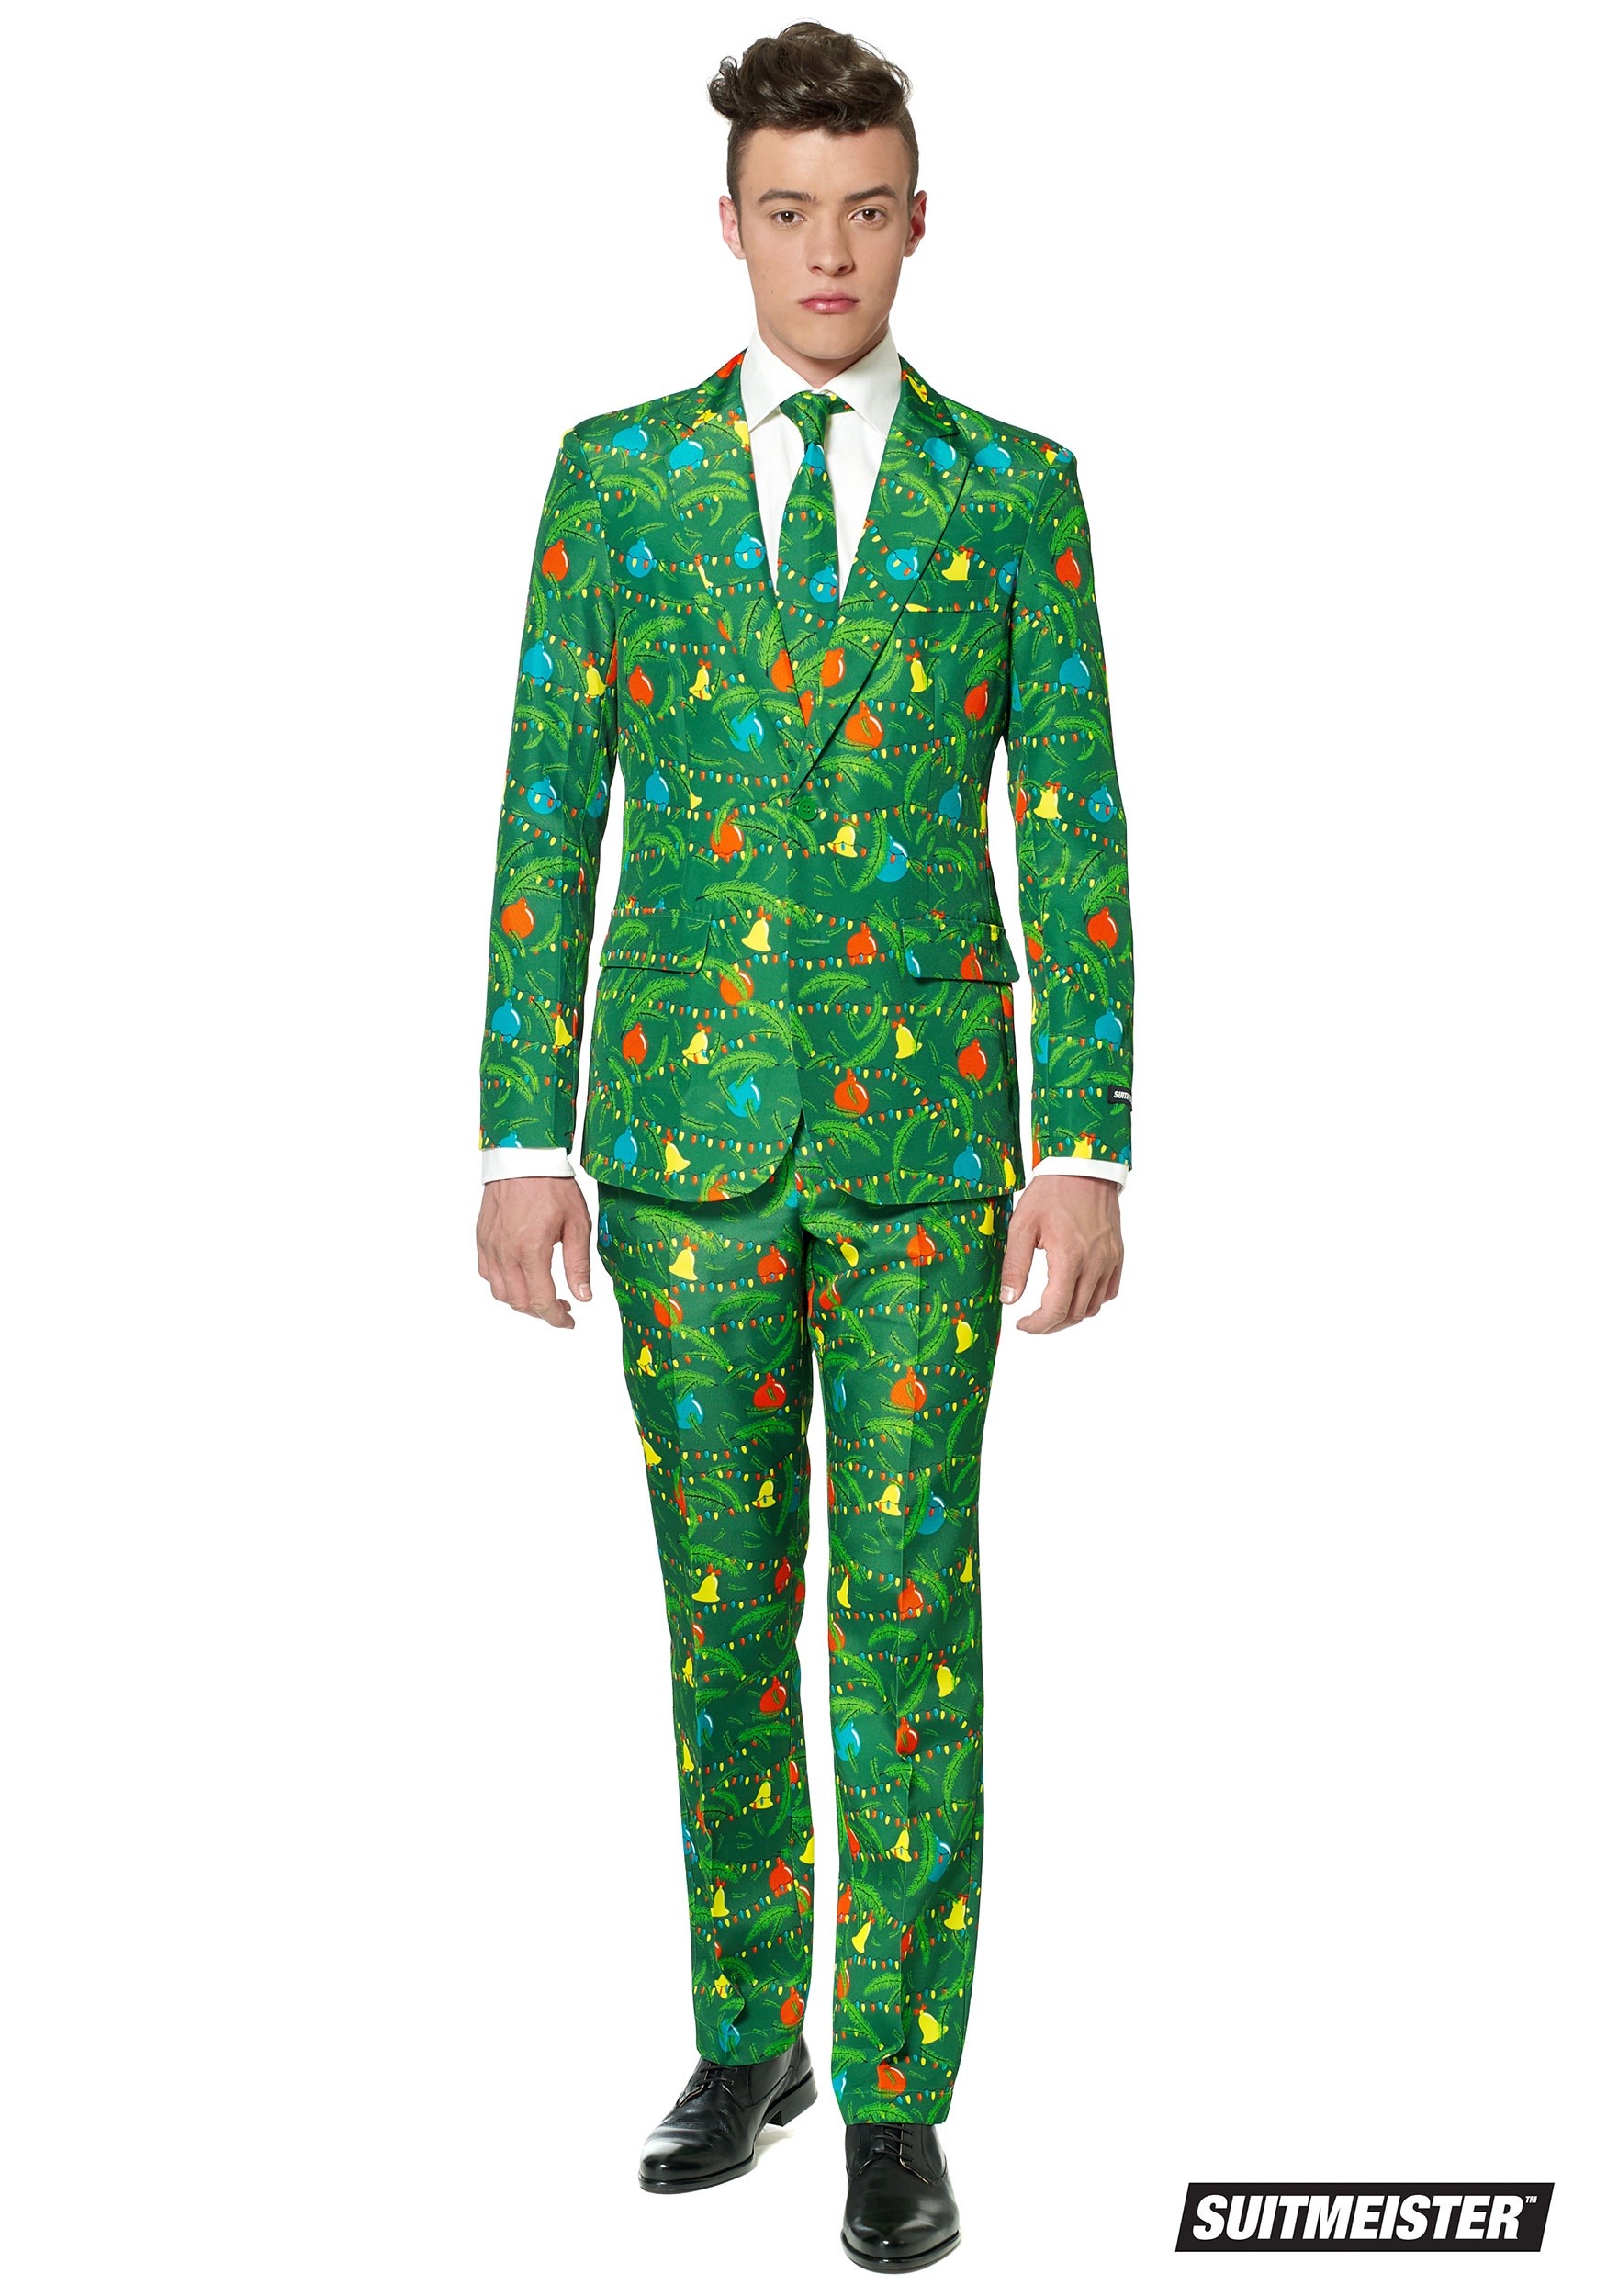 Green Christmas Tree Men's Suitmeister Suit